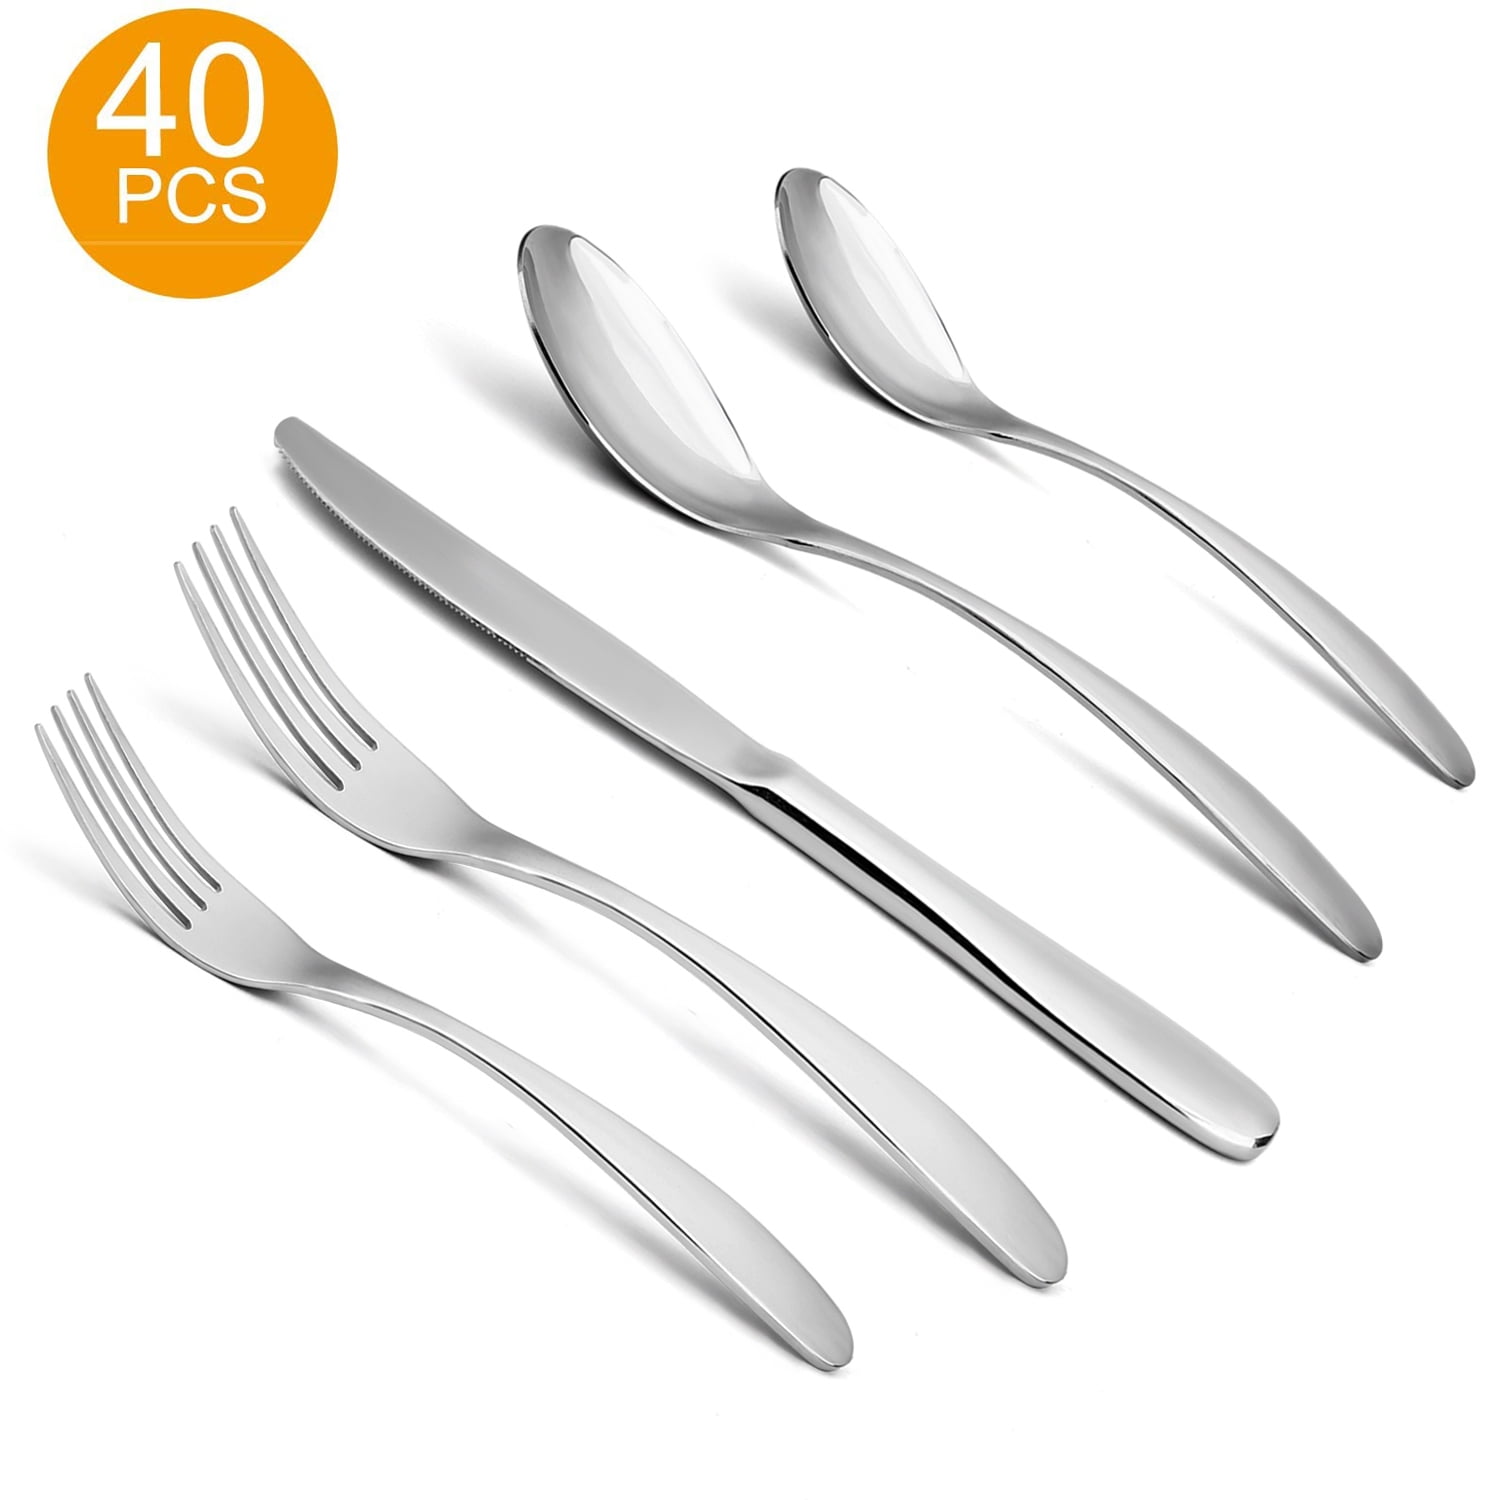 Simple & Classic Design Dinner Knives/Forks/Spoons E-far Stainless Steel Eating Utensils Service for 8 Mirror Polished & Dishwasher Safe 40-Piece Flatware Set Silverware Set